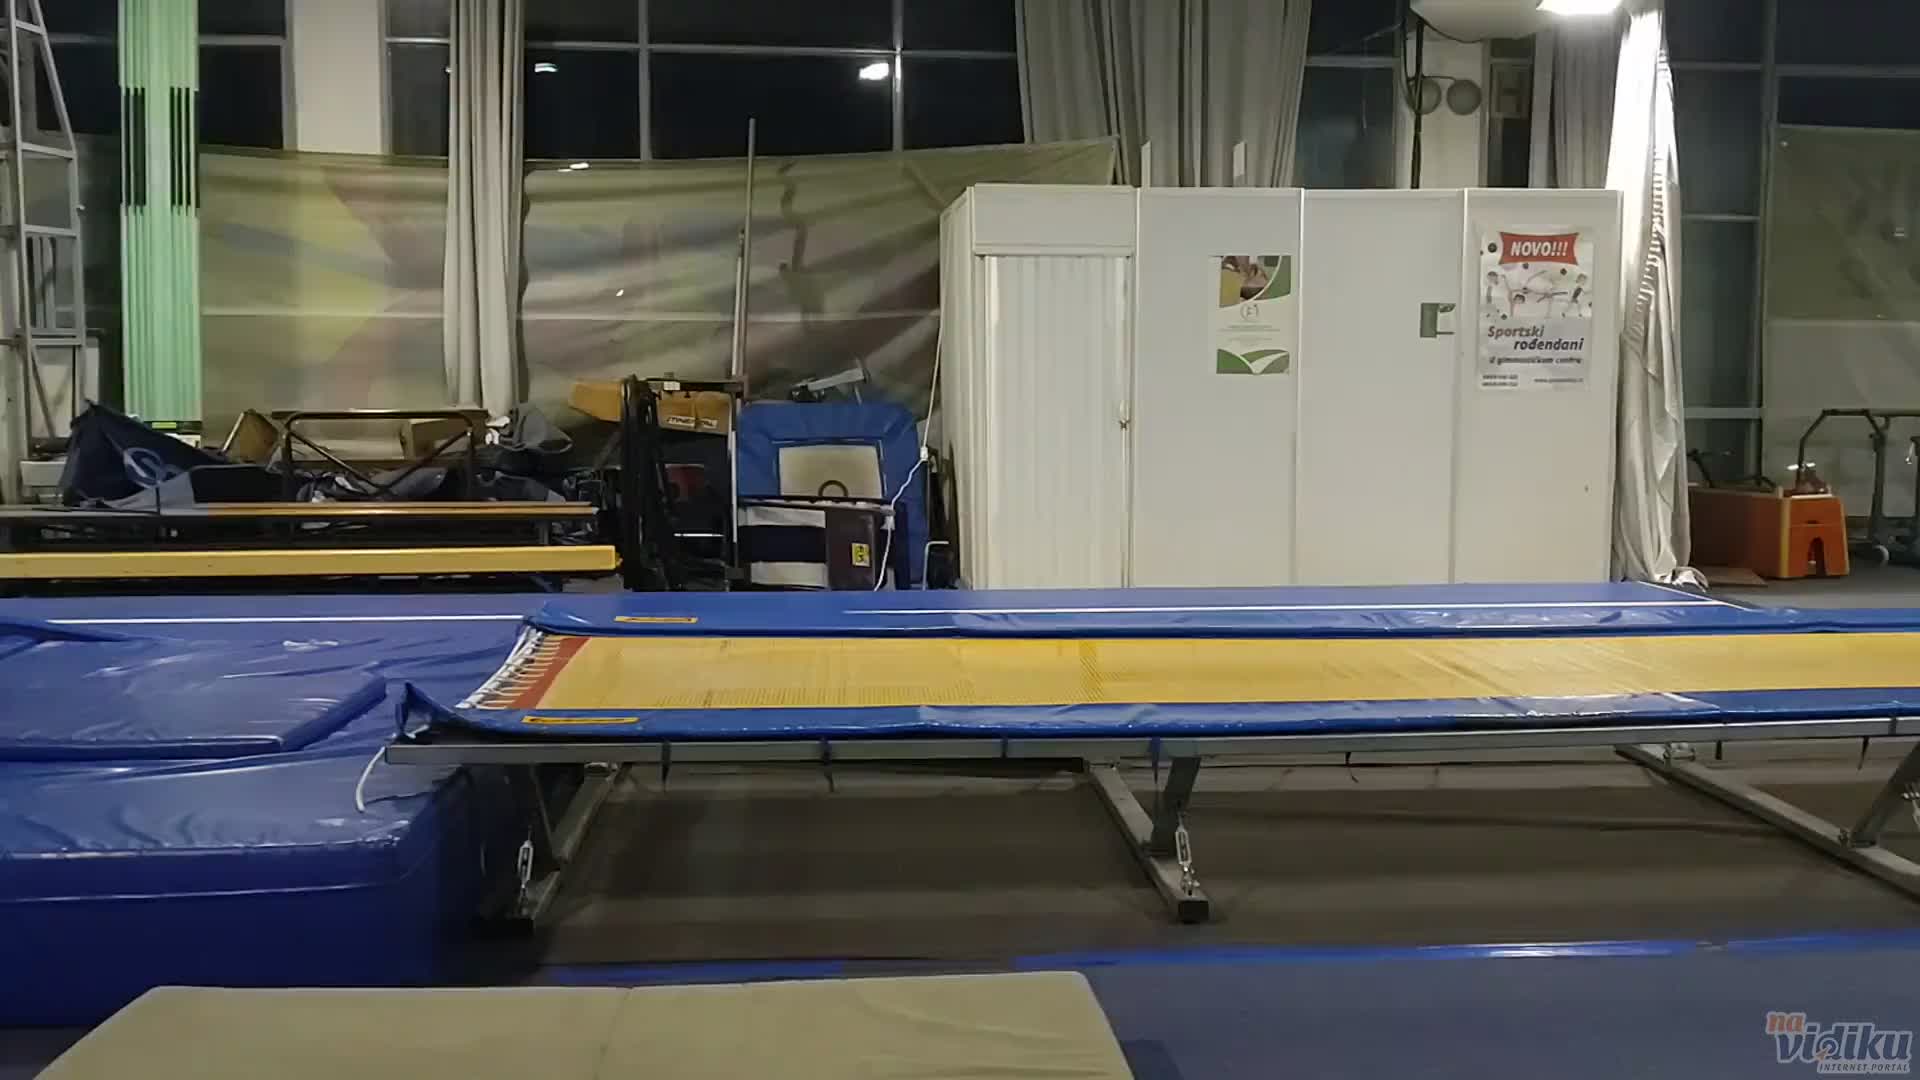 Treniranje gimnastike - vežba na trambolini